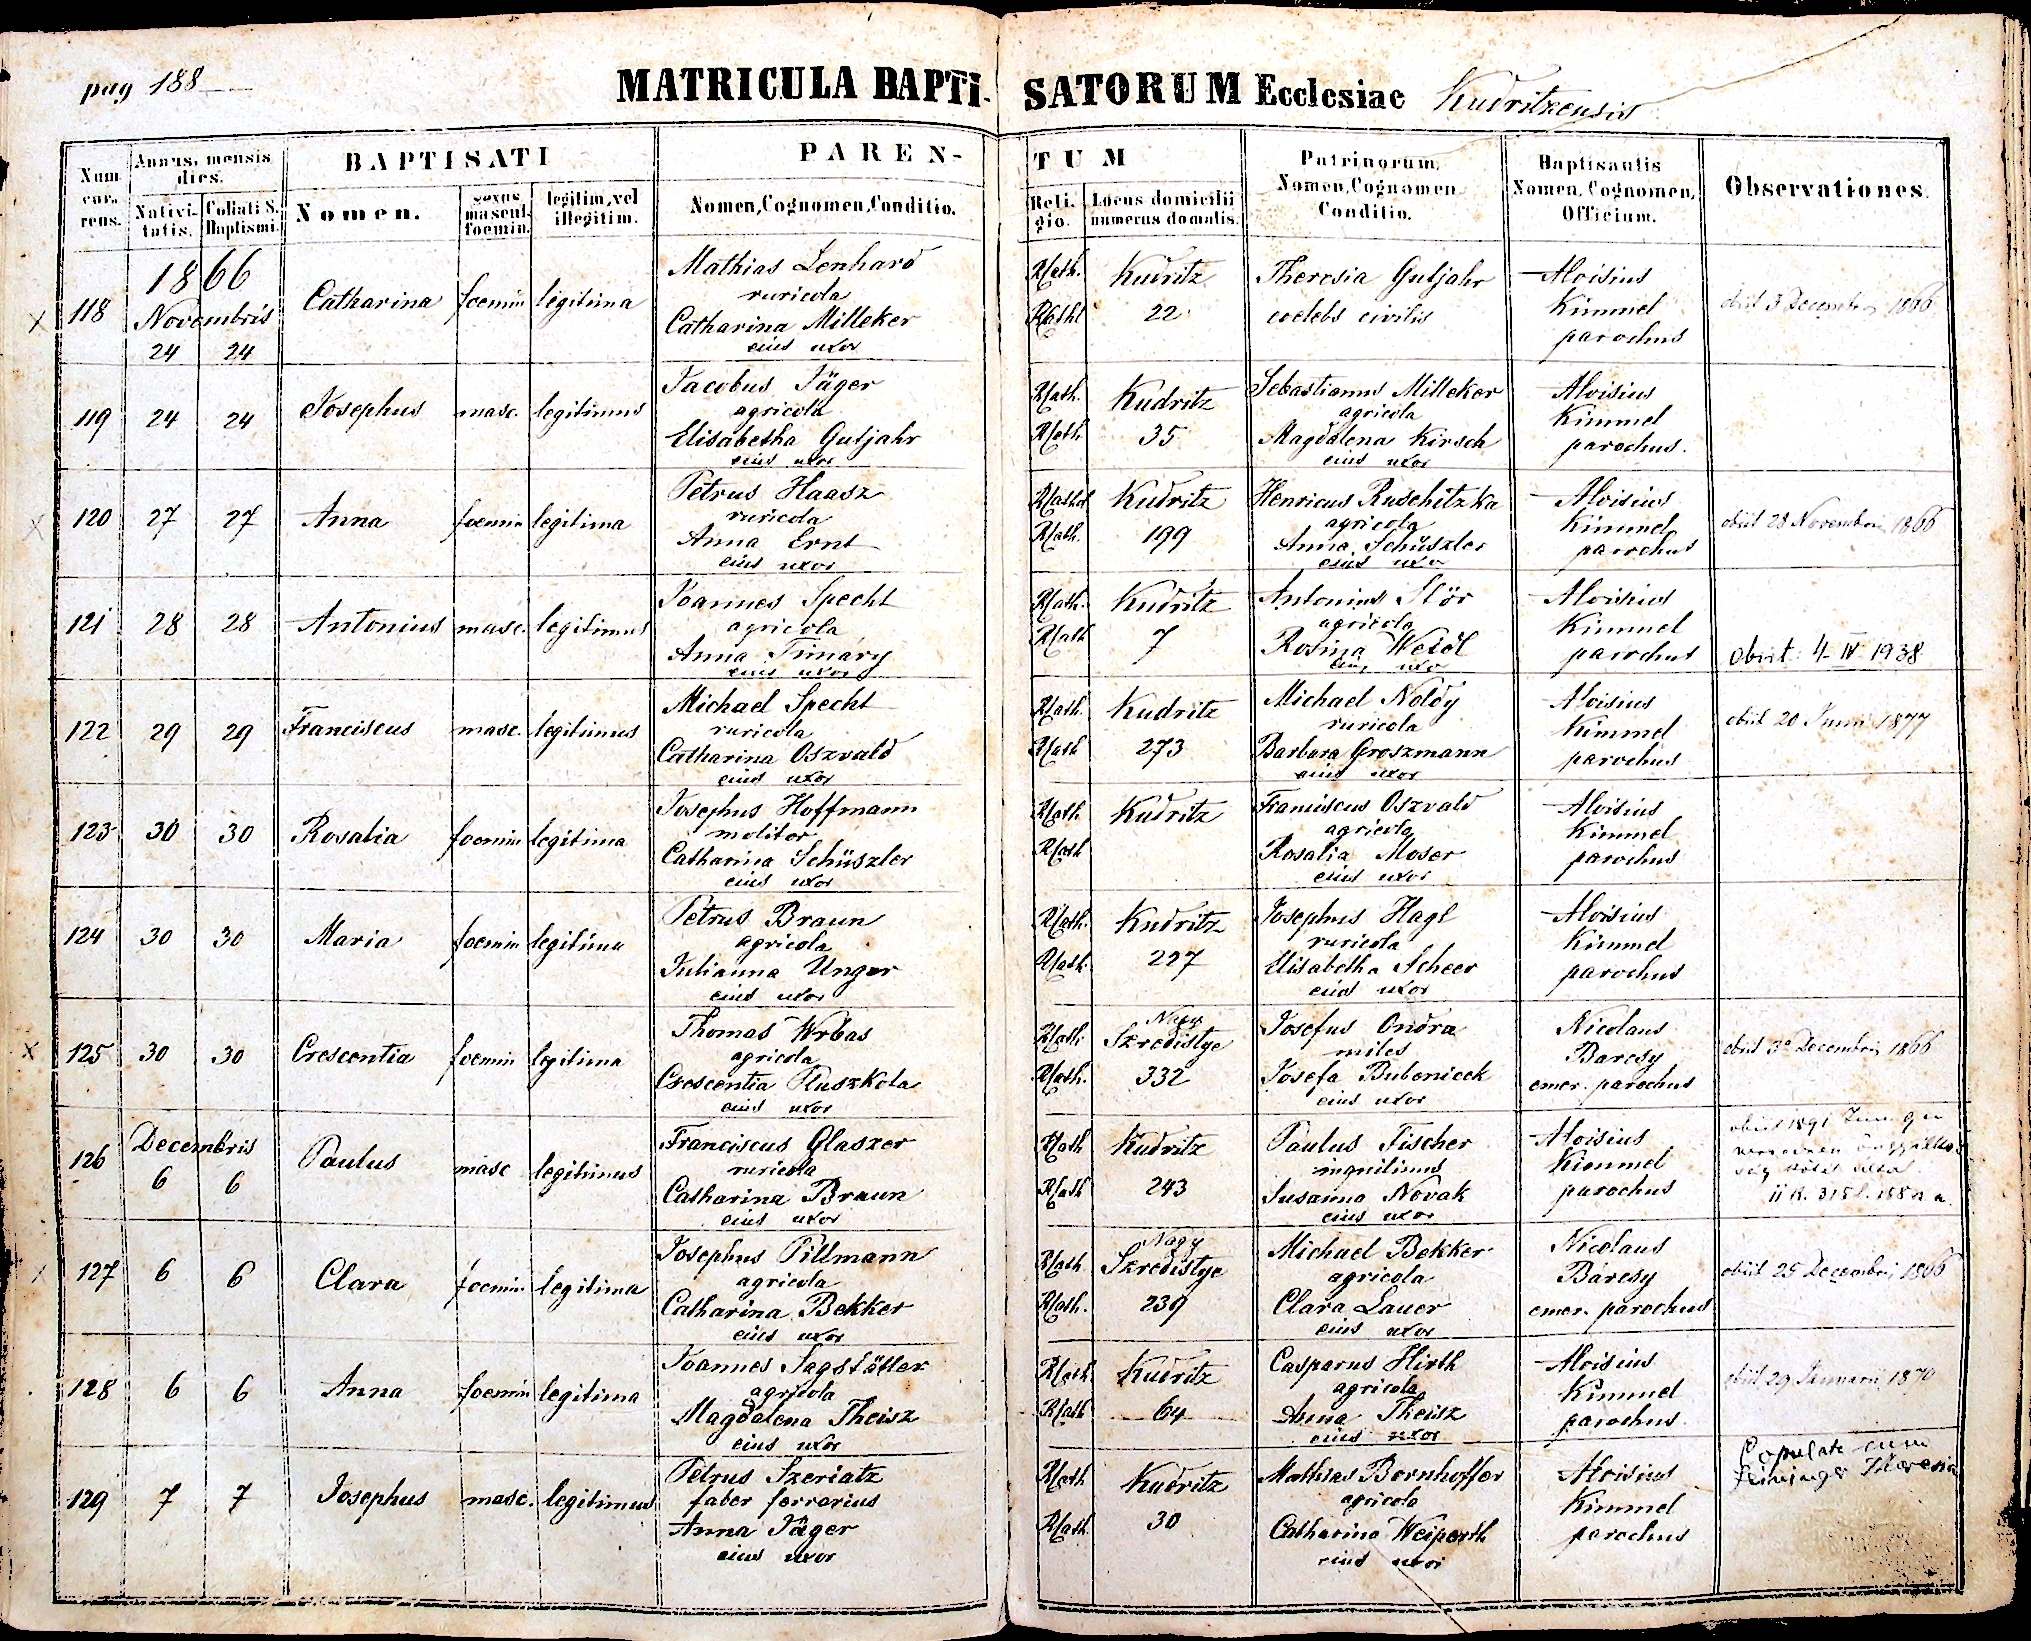 images/church_records/BIRTHS/1852-1870B/188